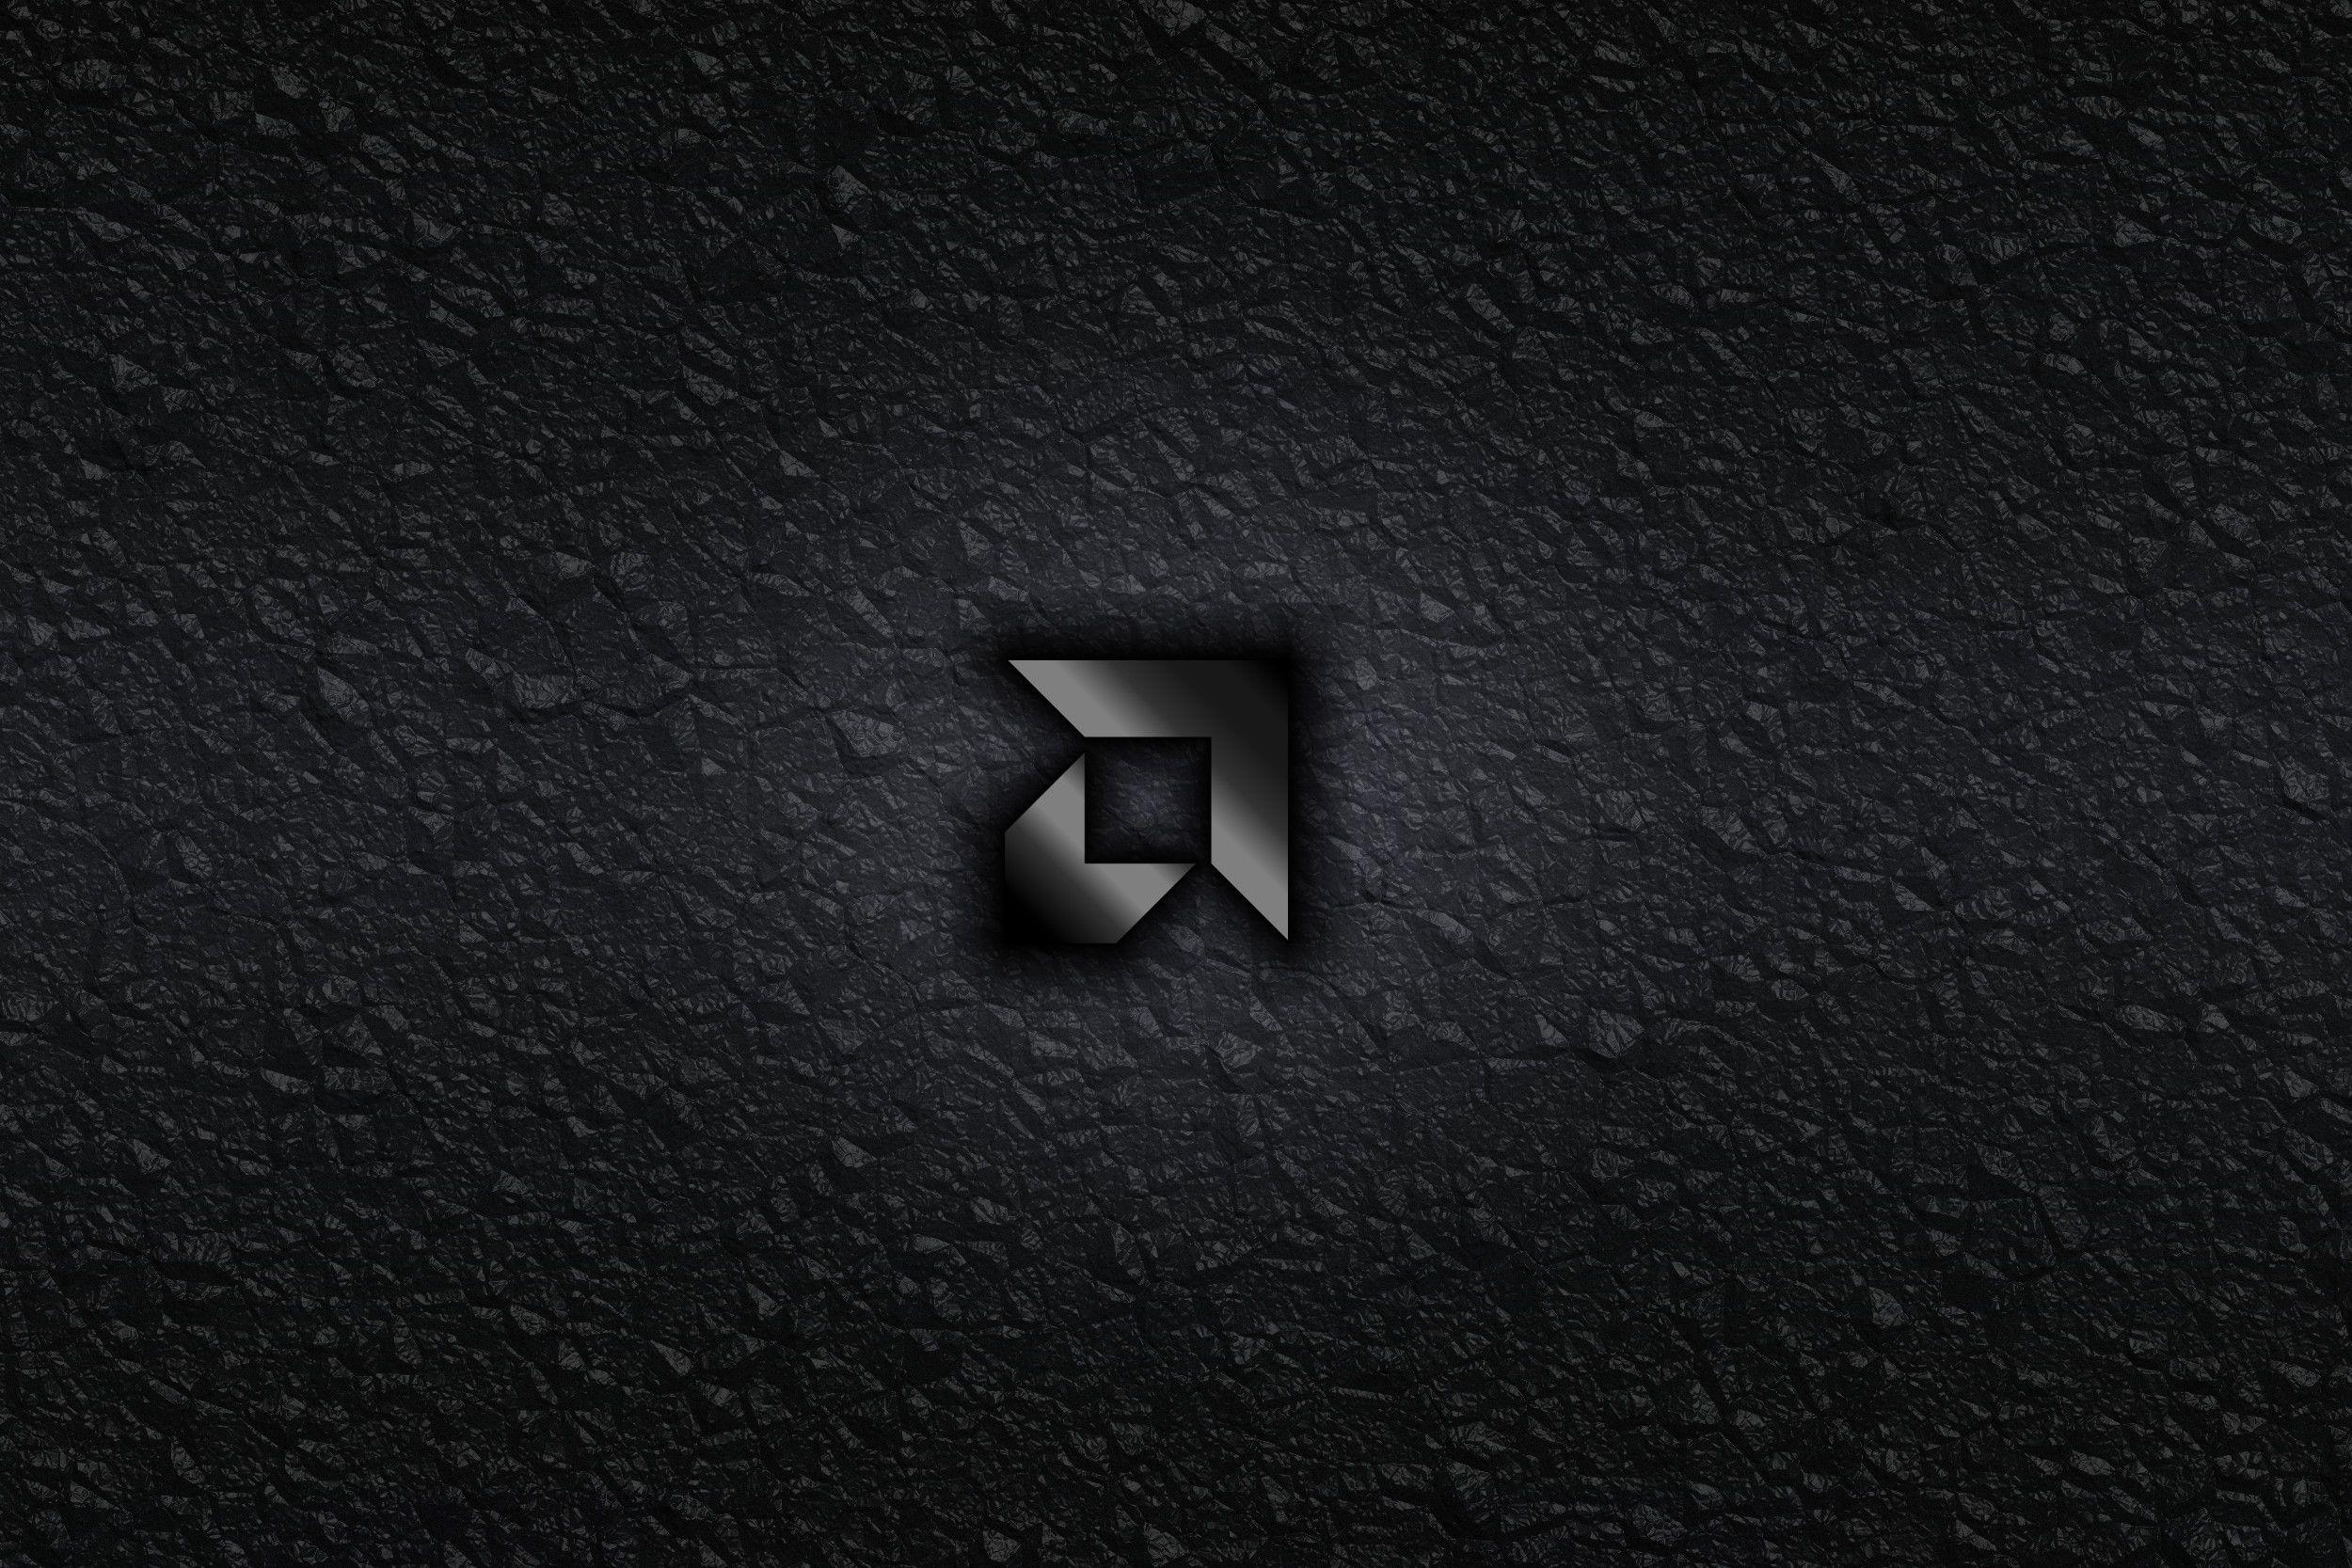 AMD Logo Wallpaper, Best & Inspirational High Quality AMD Logo